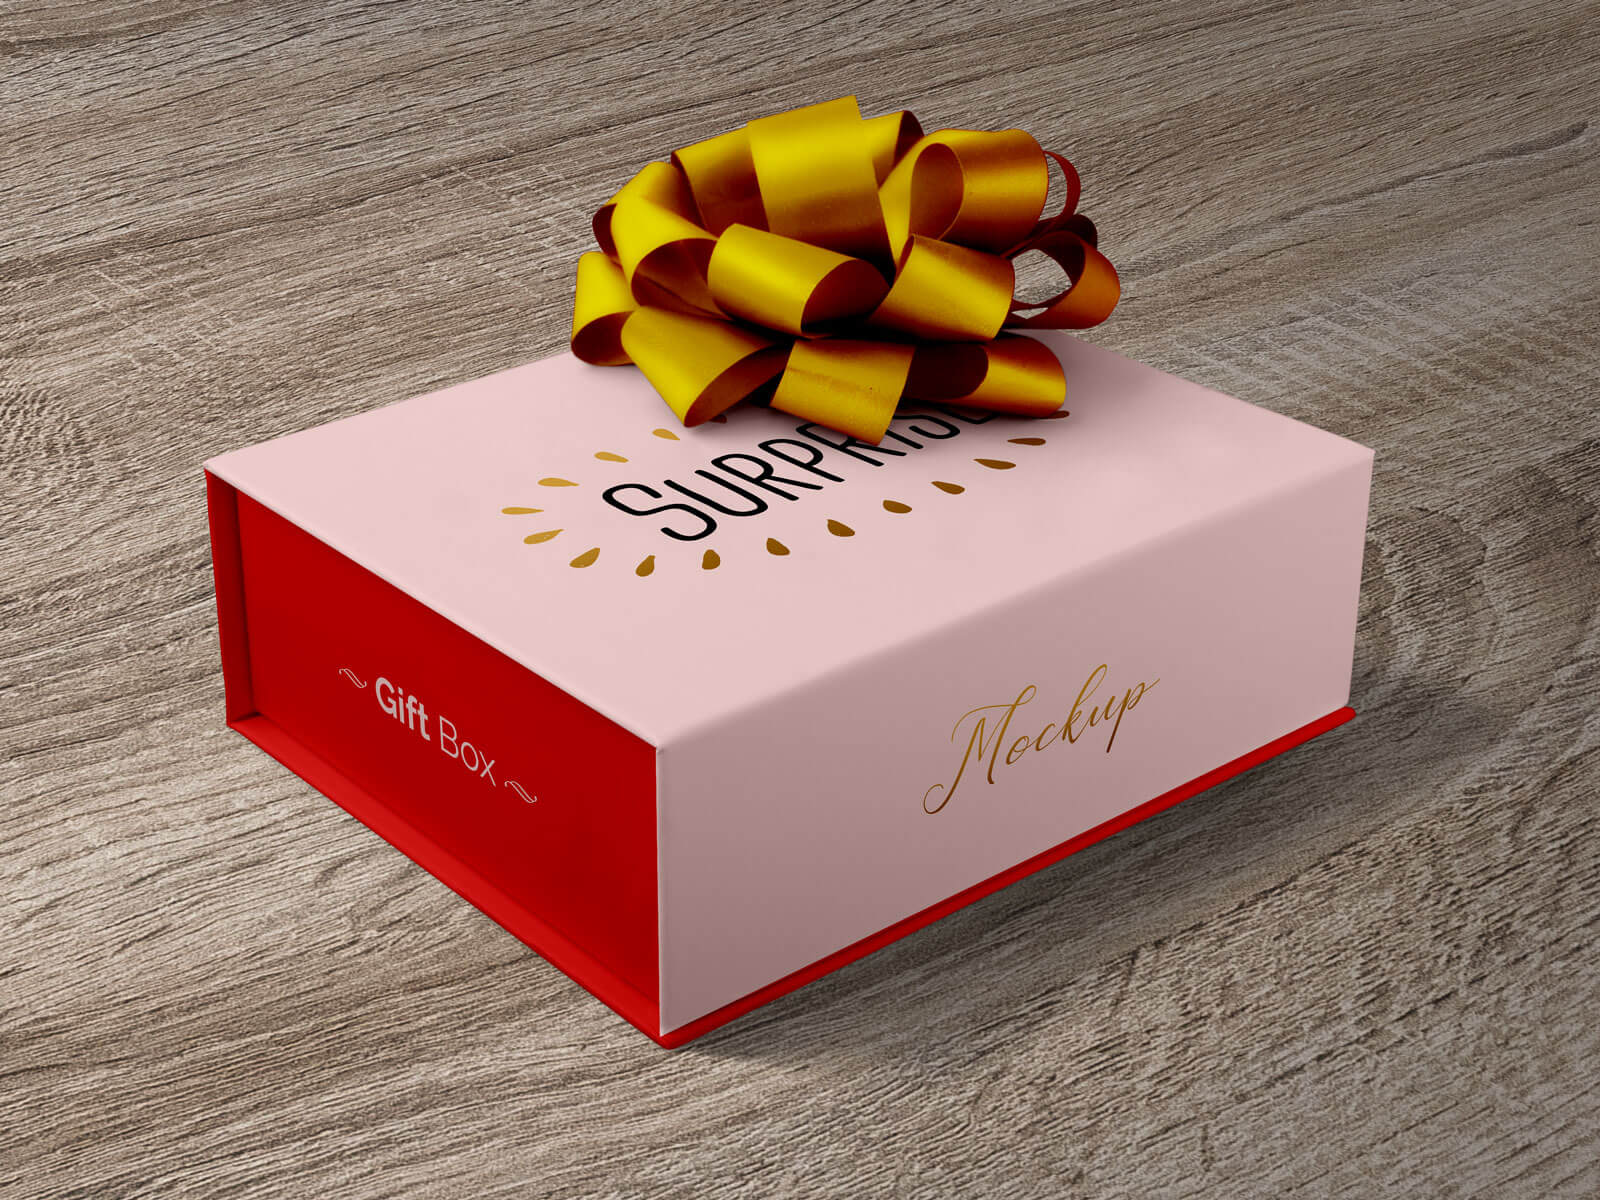 Download Free Gift Packaging Box Mockup PSD | Designbolts